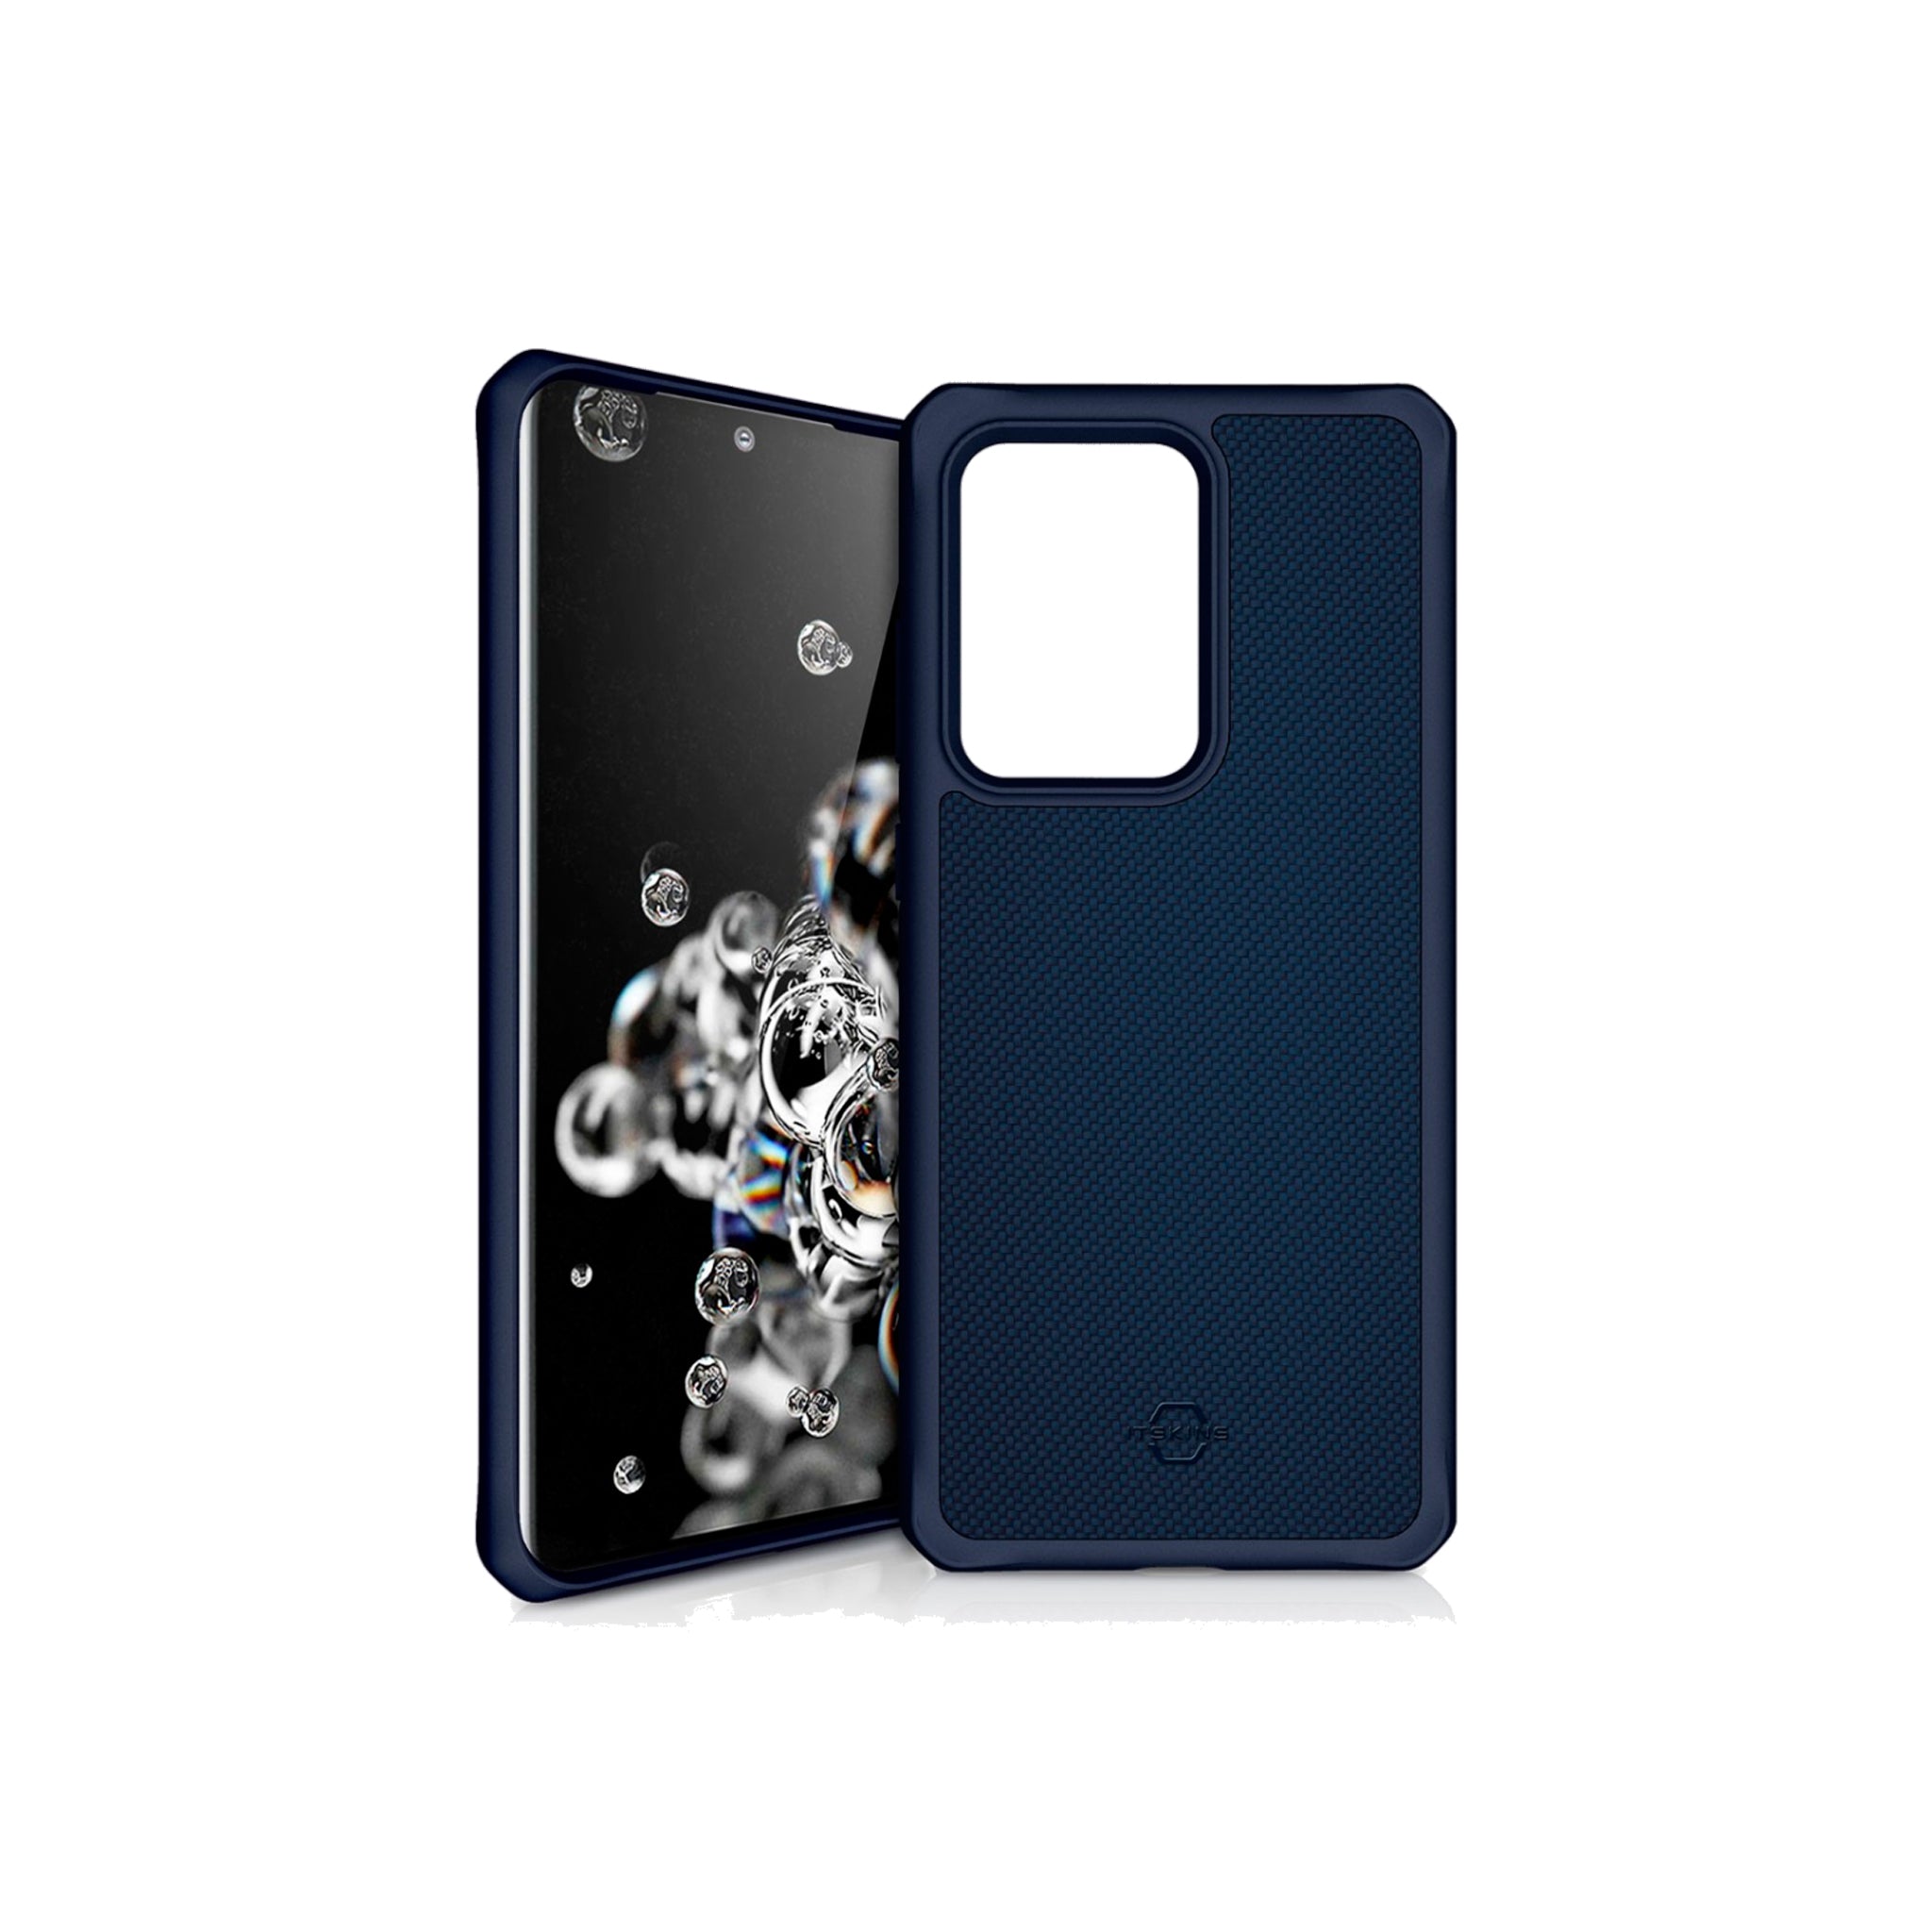 Itskins - Hybrid Fusion Case For Samsung Galaxy S20 Ultra - Dark Blue